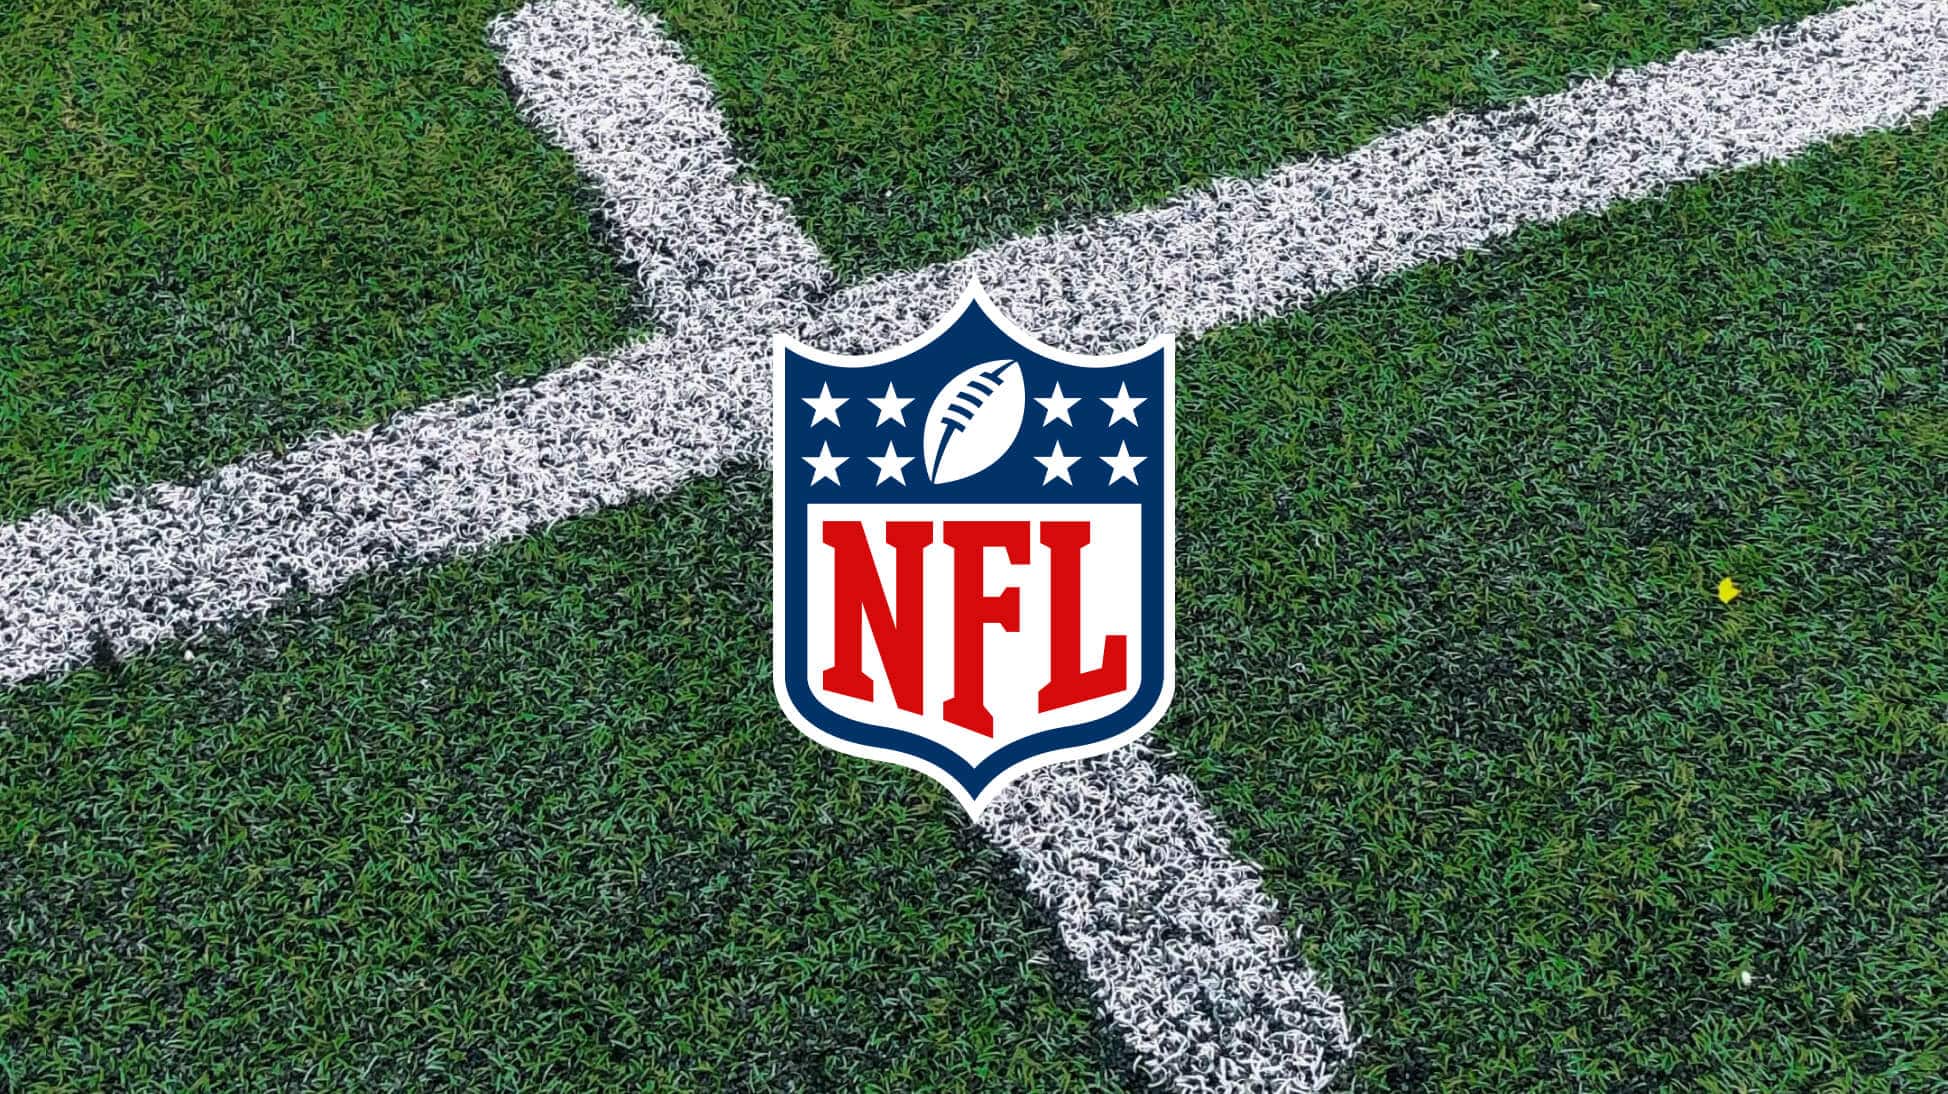 nfl logo over football field